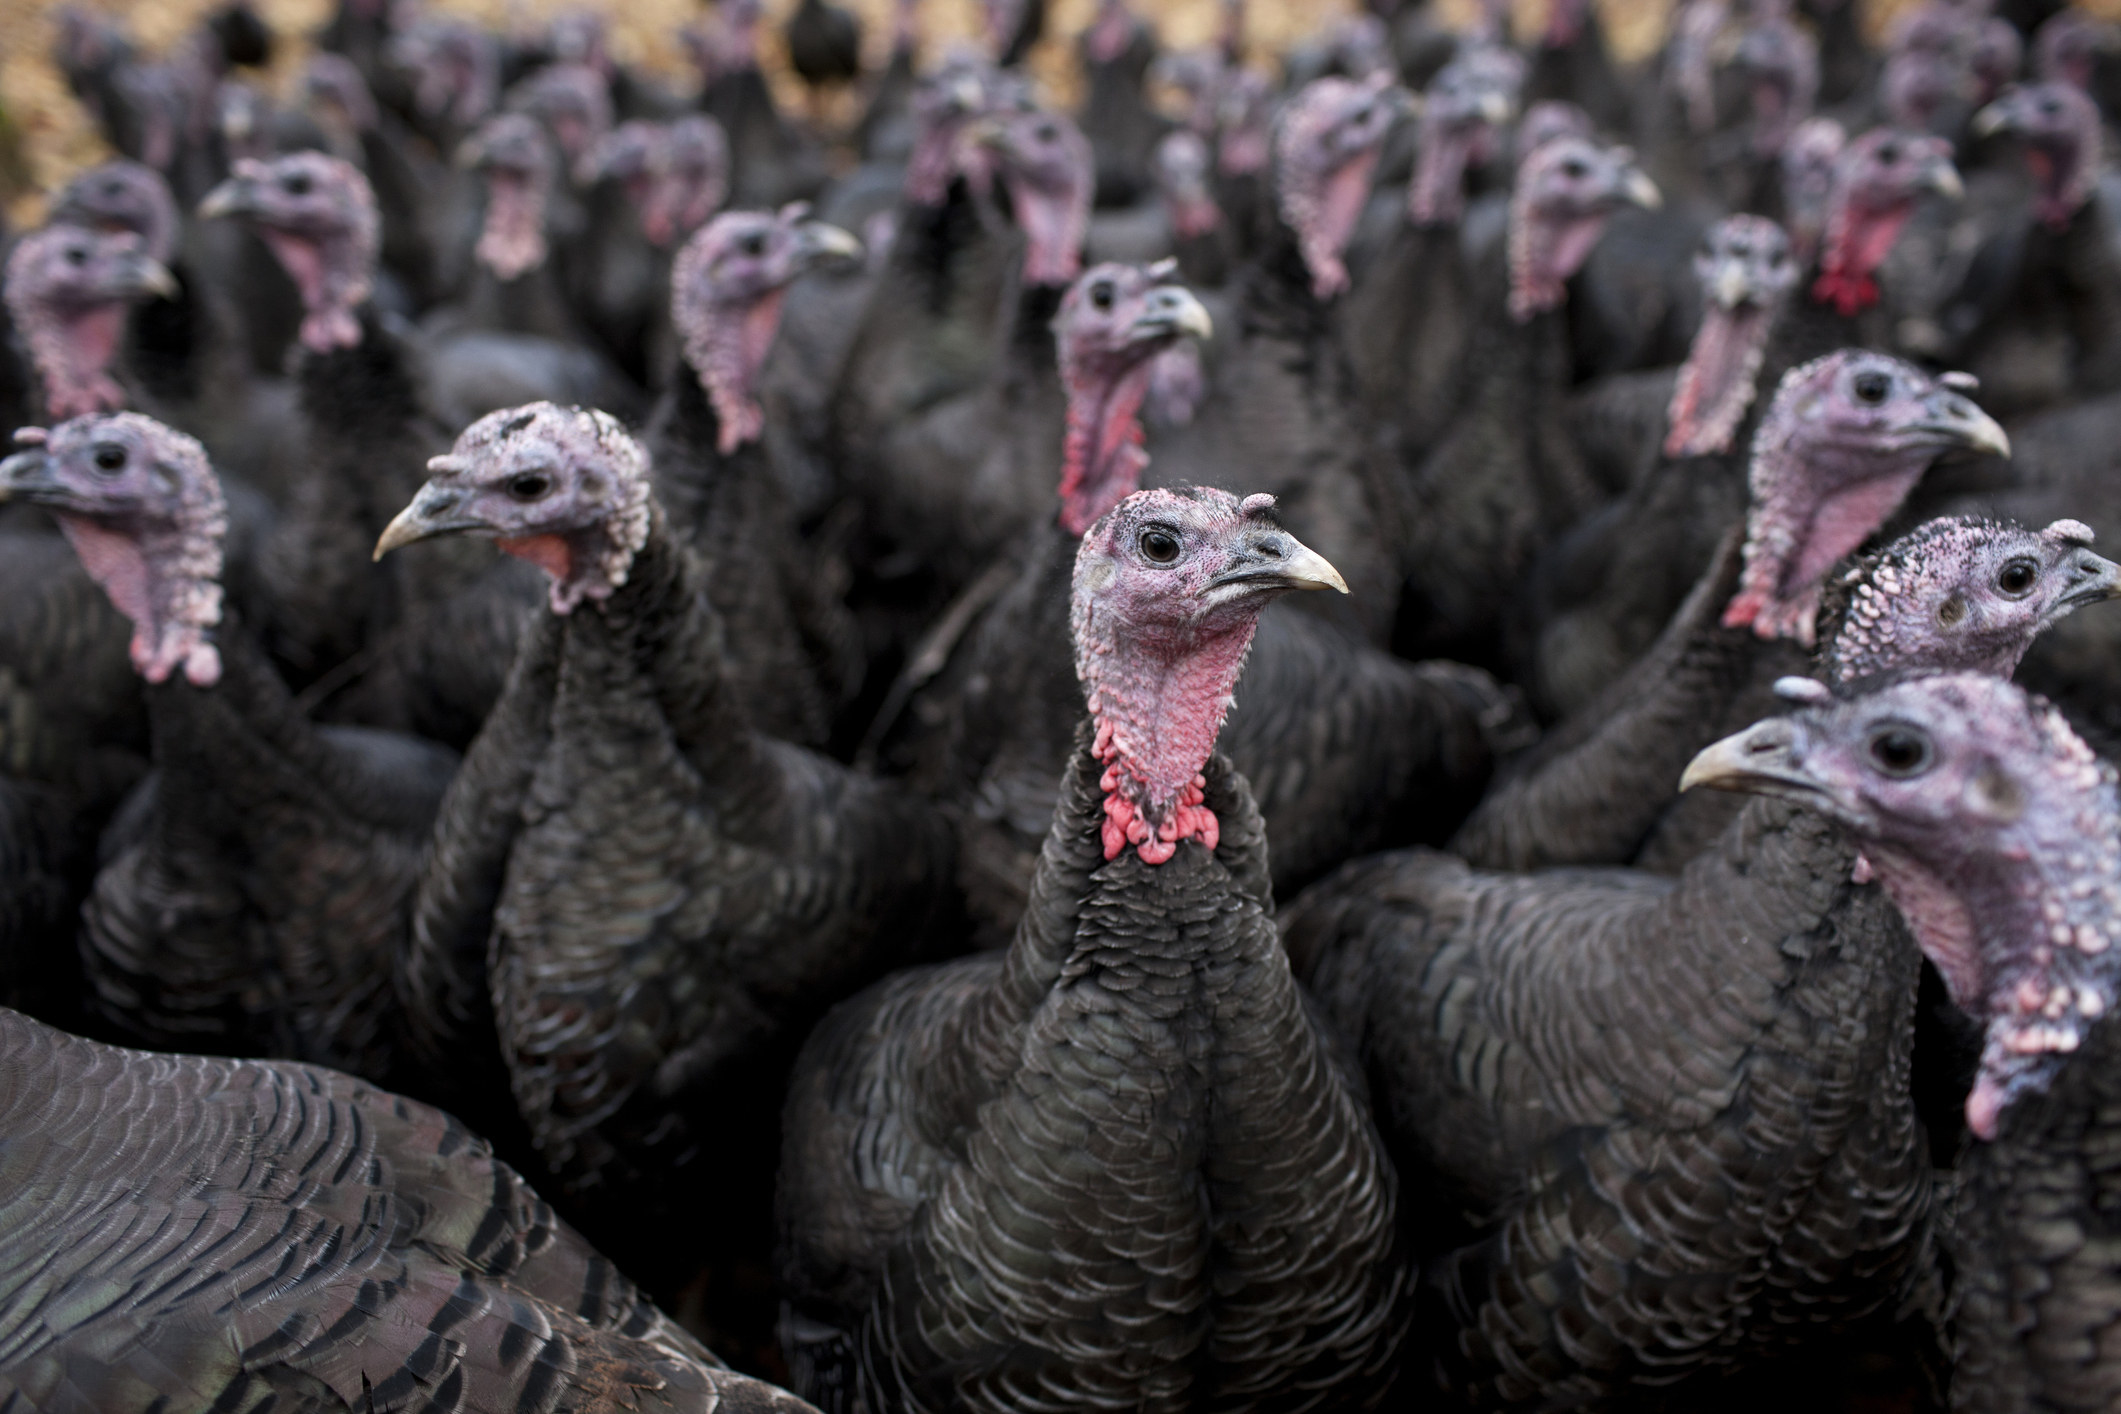 A flock of turkeys